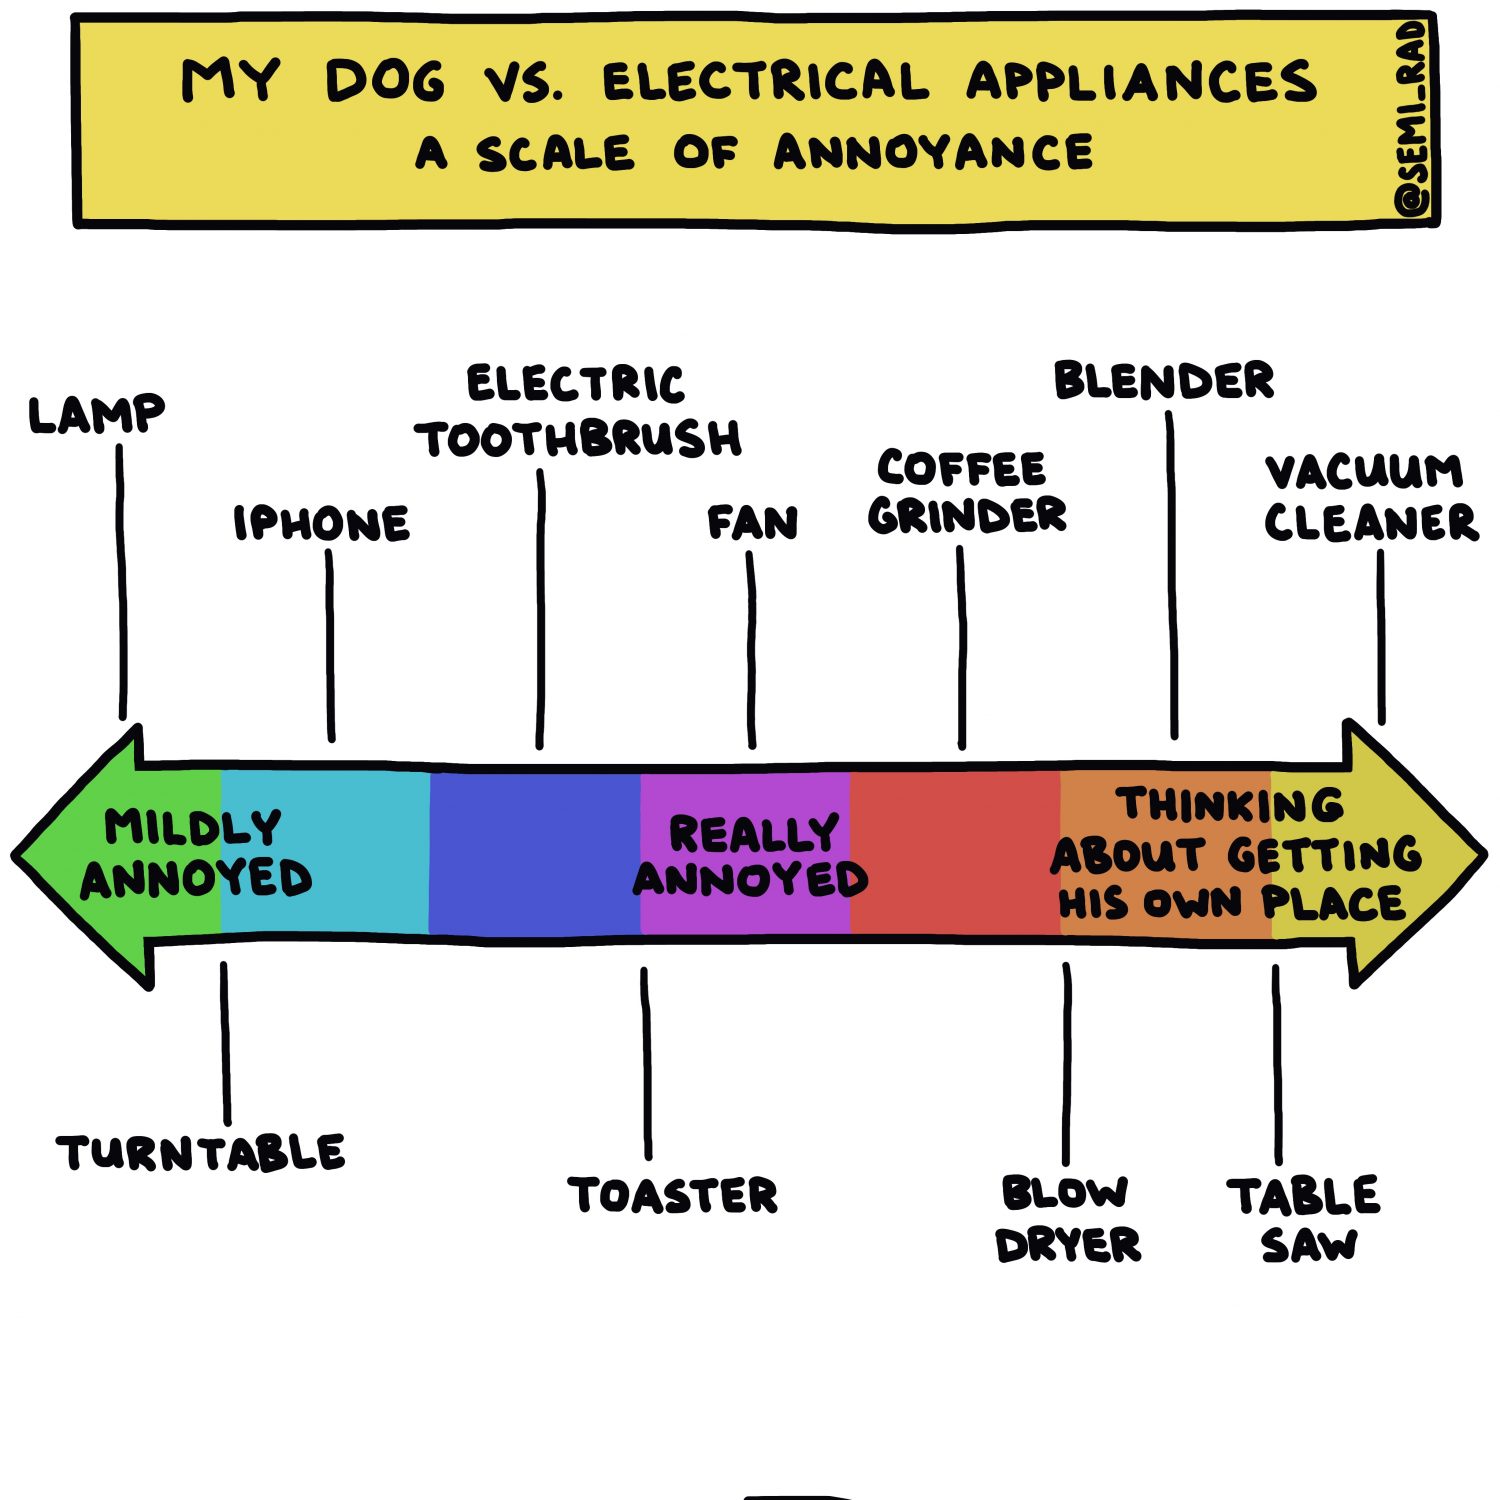 My Dog Vs. Electrical Appliances